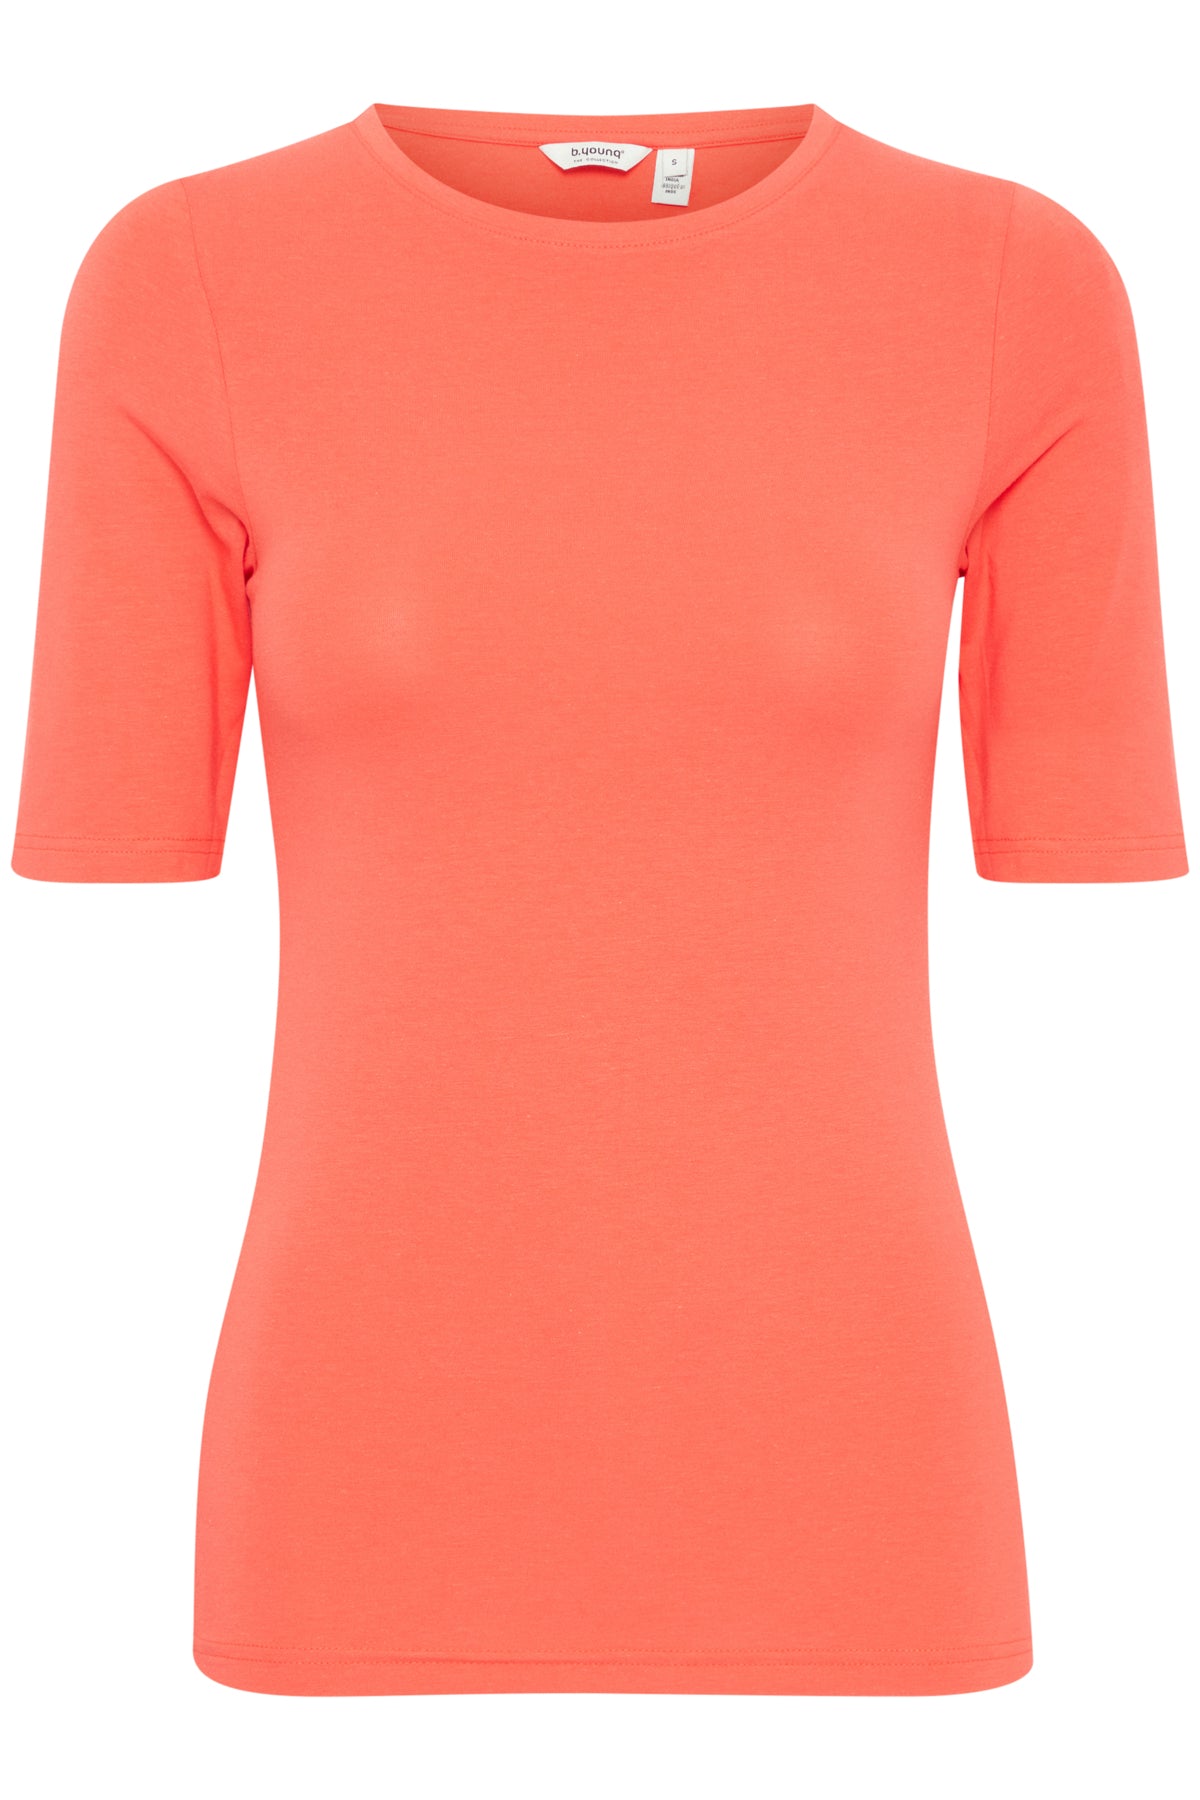 B.Young Pamila Jersey Orange T-Shirt